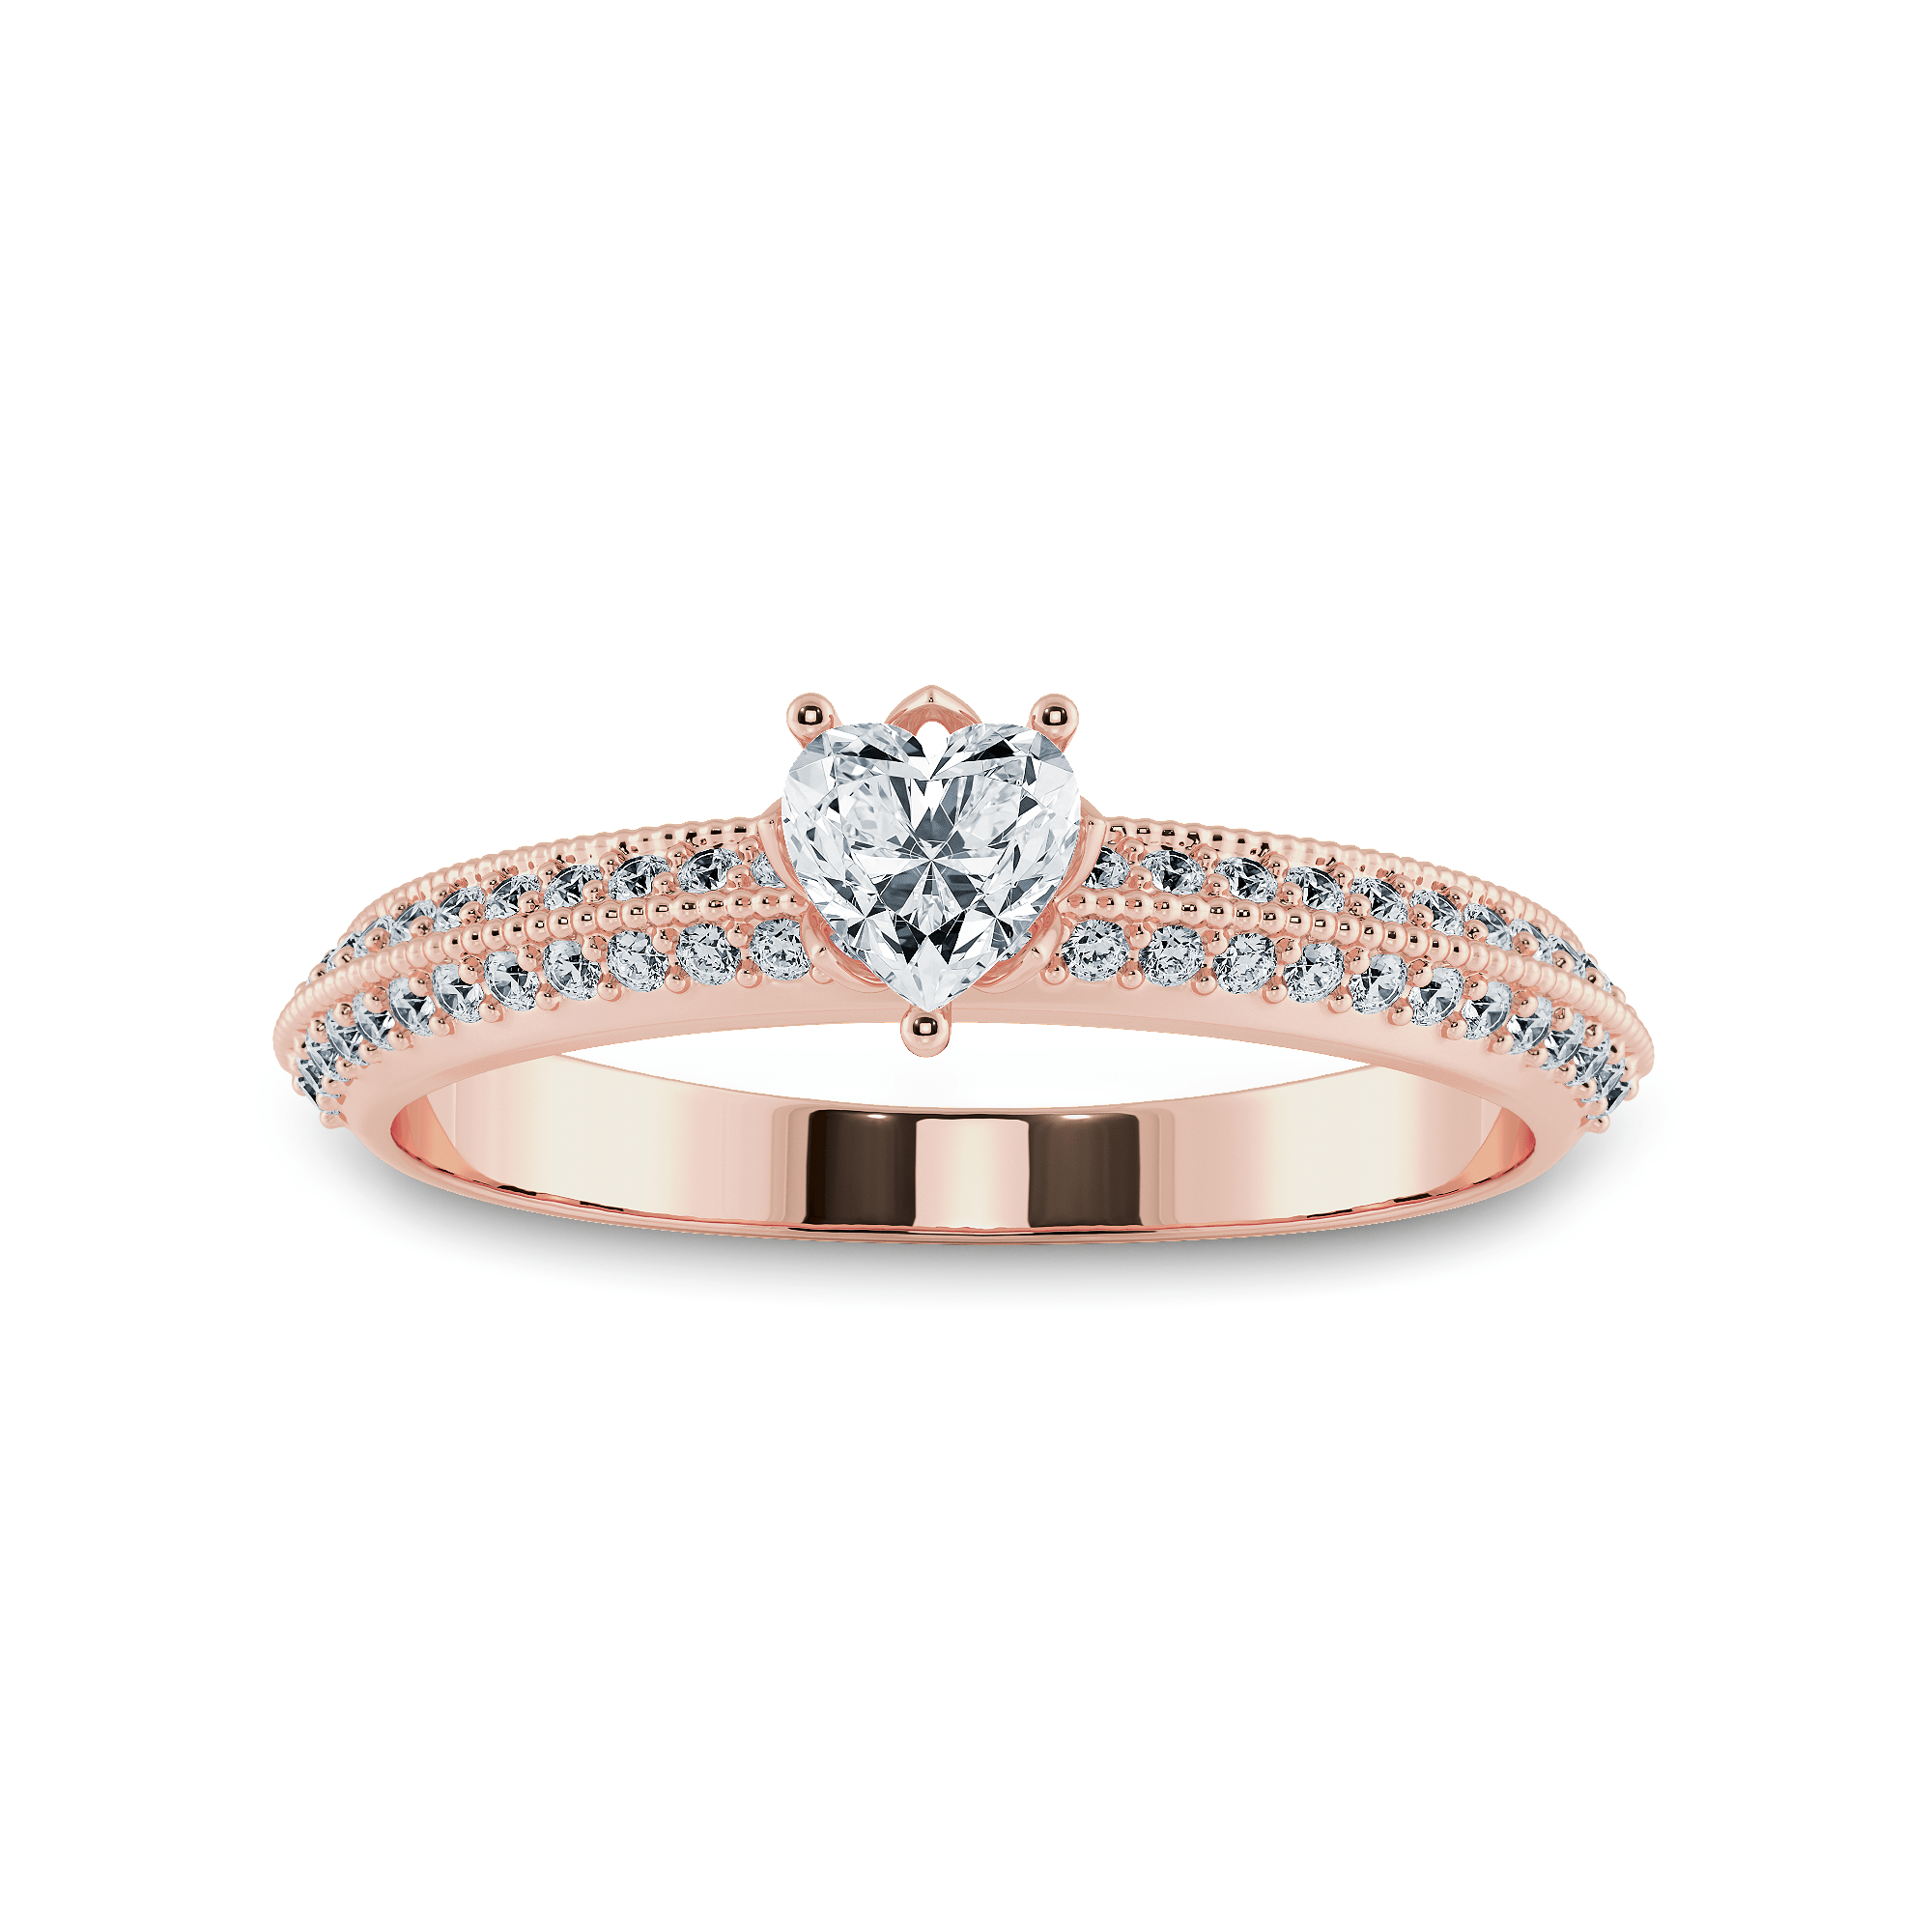 33 Unique Heart Engagement Rings | Heart engagement rings, Heart shaped  diamond ring, Heart shaped engagement rings